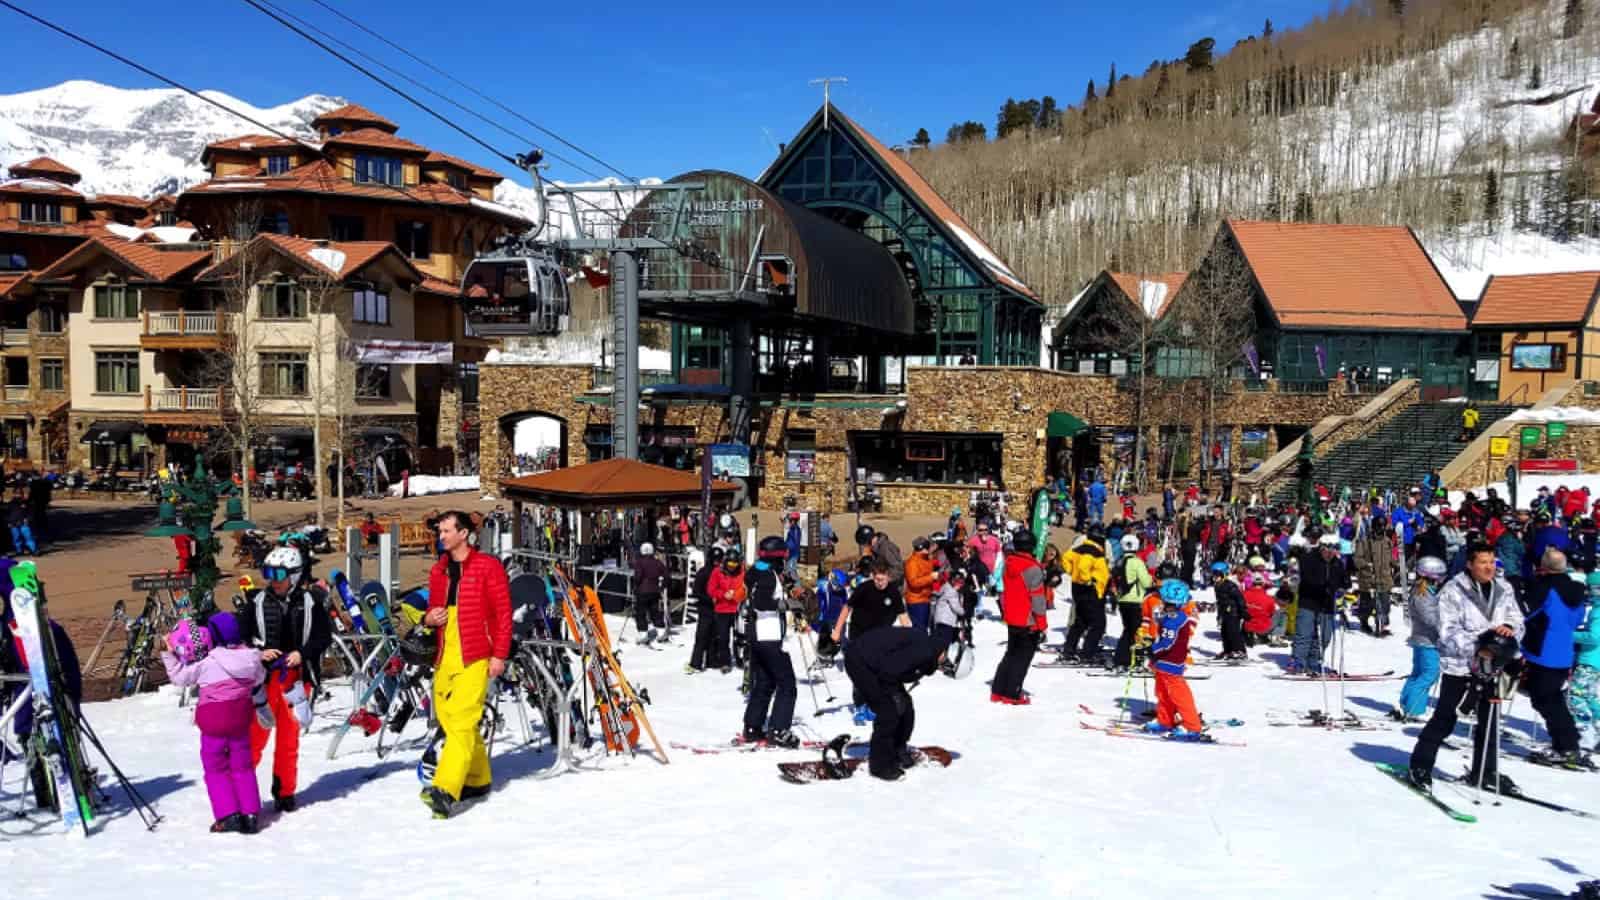 Telluride Ski Resort, Mountain Village, Colorado - March 25, 2019: Visitors enjoy end of ski season